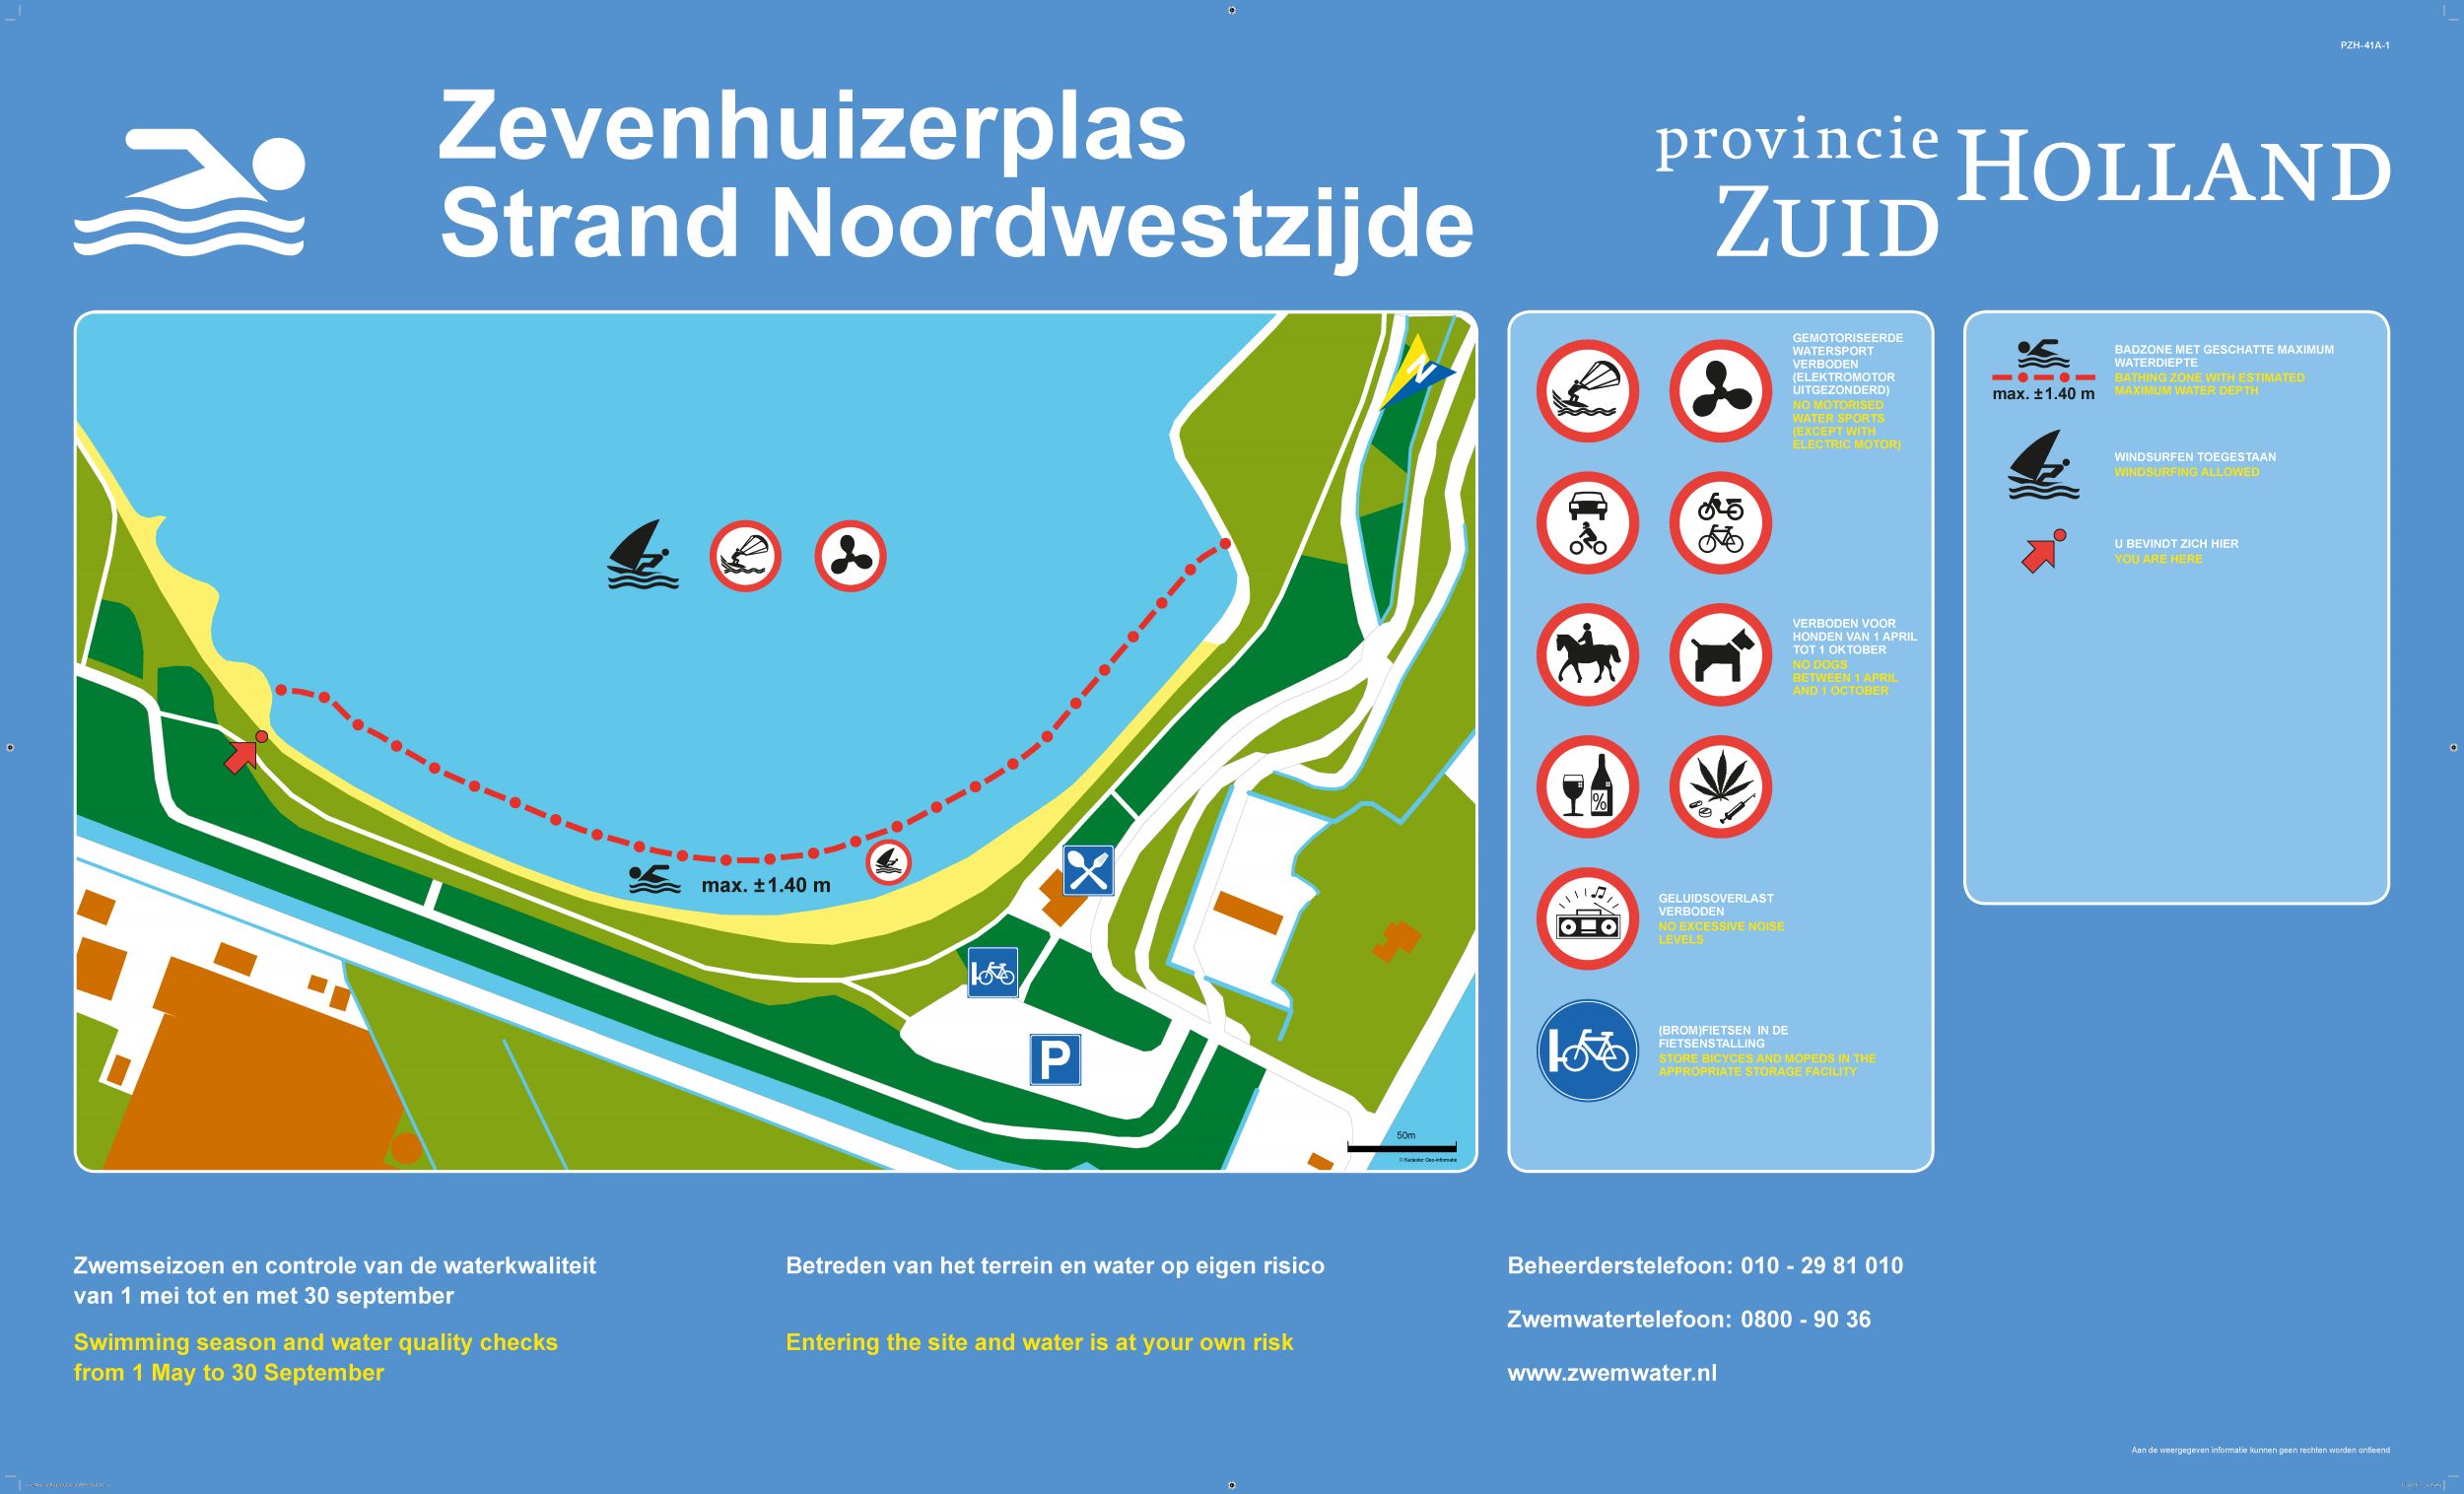 The information board at the swimming location Zevenhuizerplas Strand Noordwestzijde